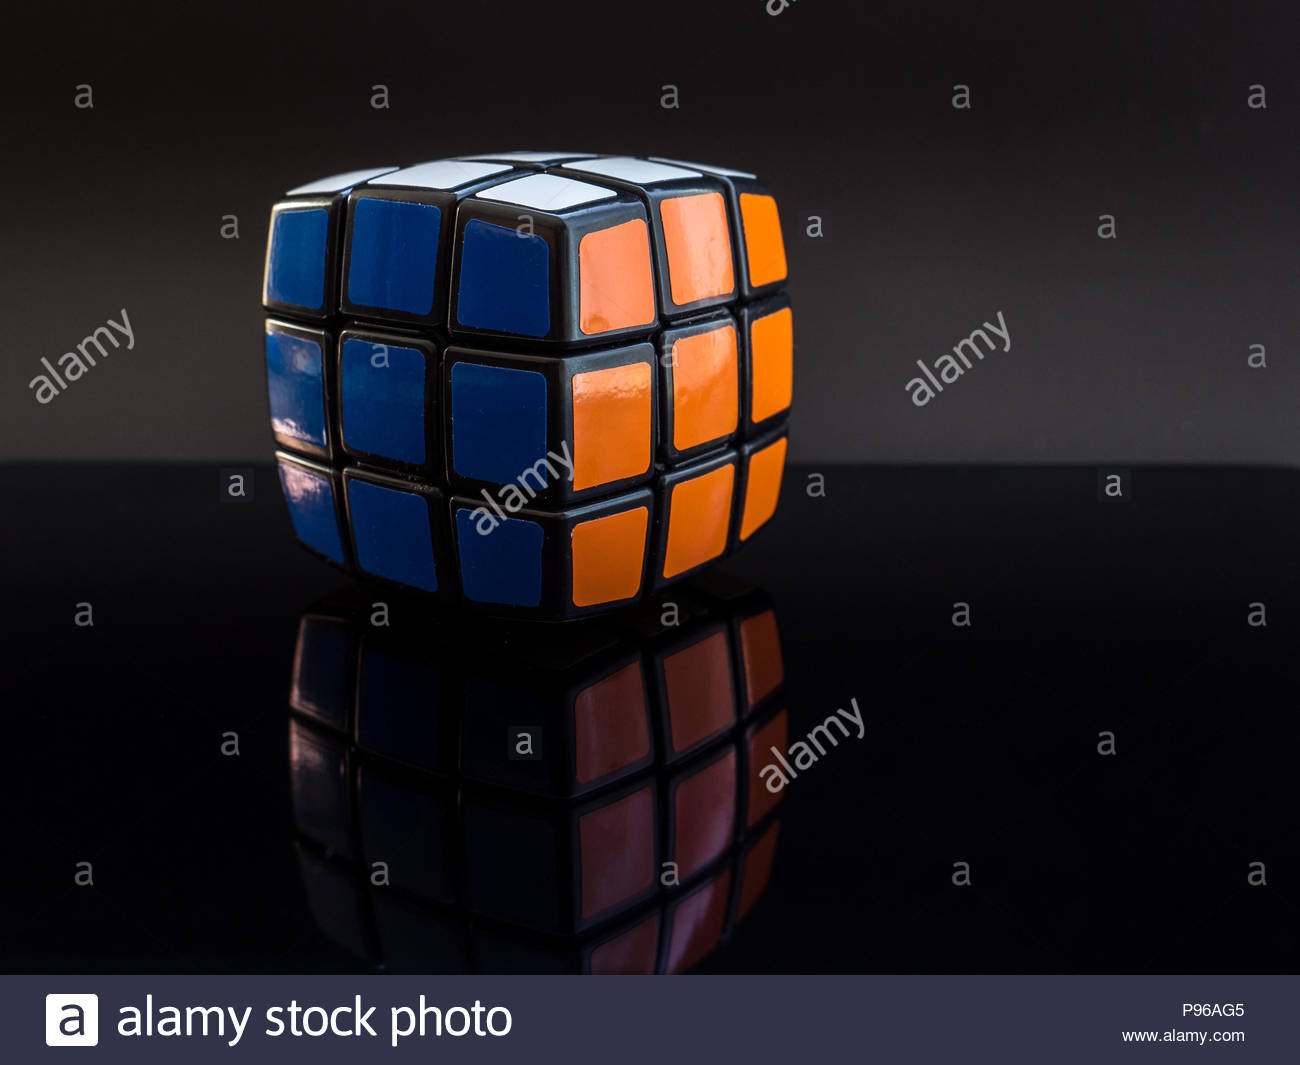 Round Rubik S Cube On Black Background With Reflection Studio